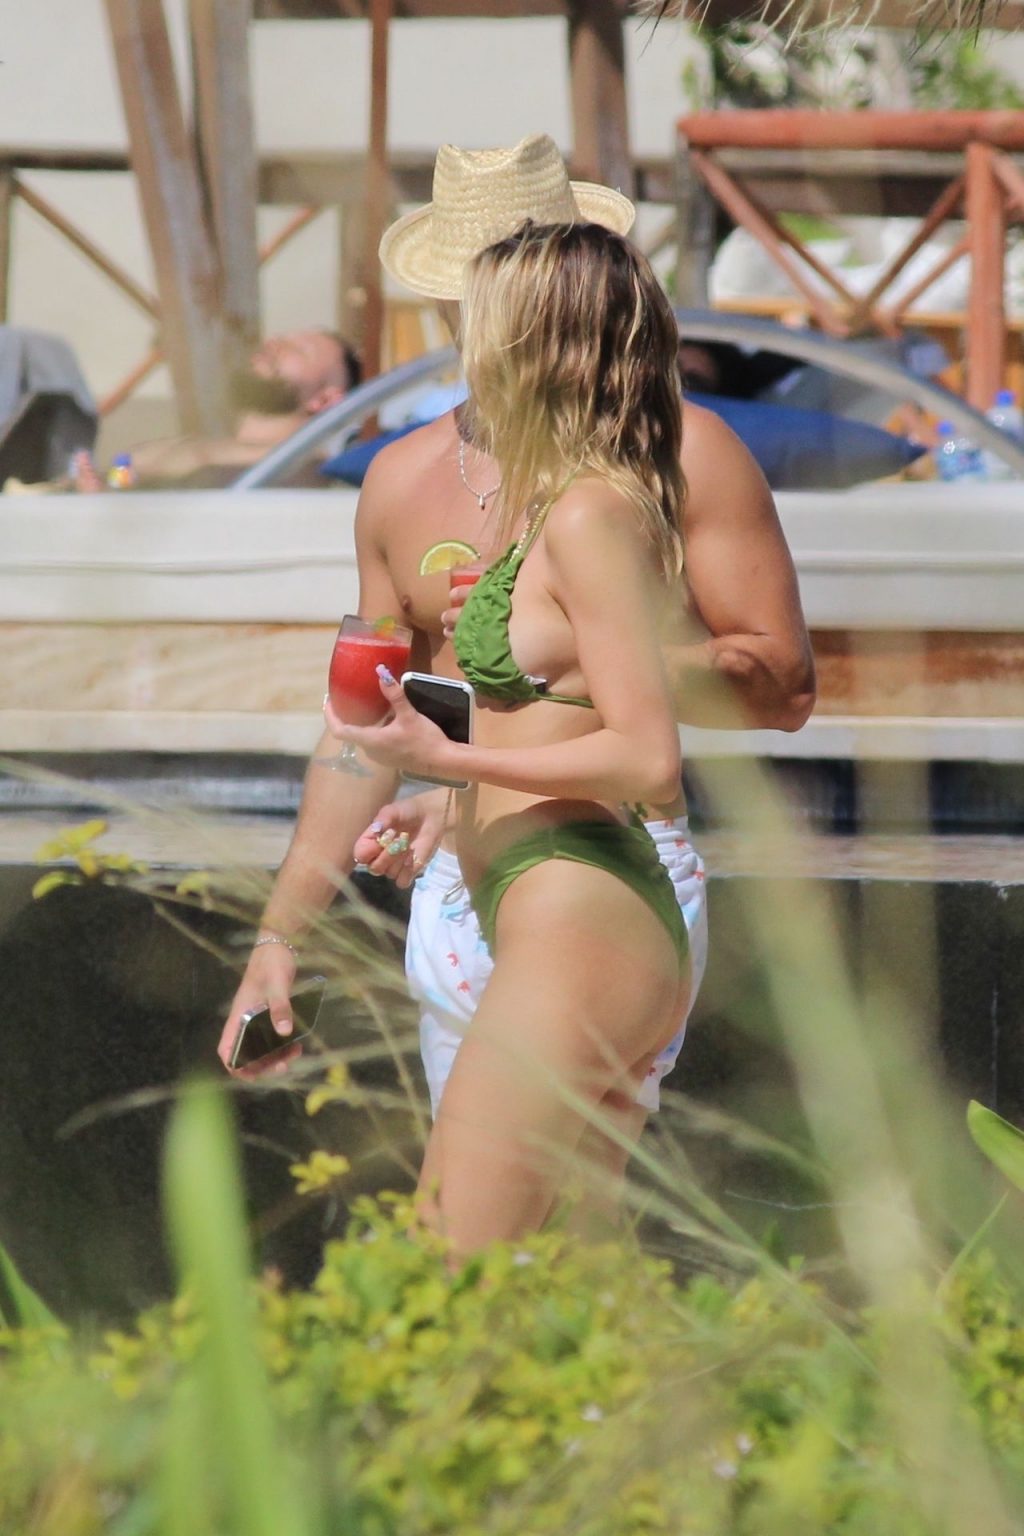 Delilah Belle Hamlin Shows Off Her Toned Figure in a Green Bikini (35 Photos)